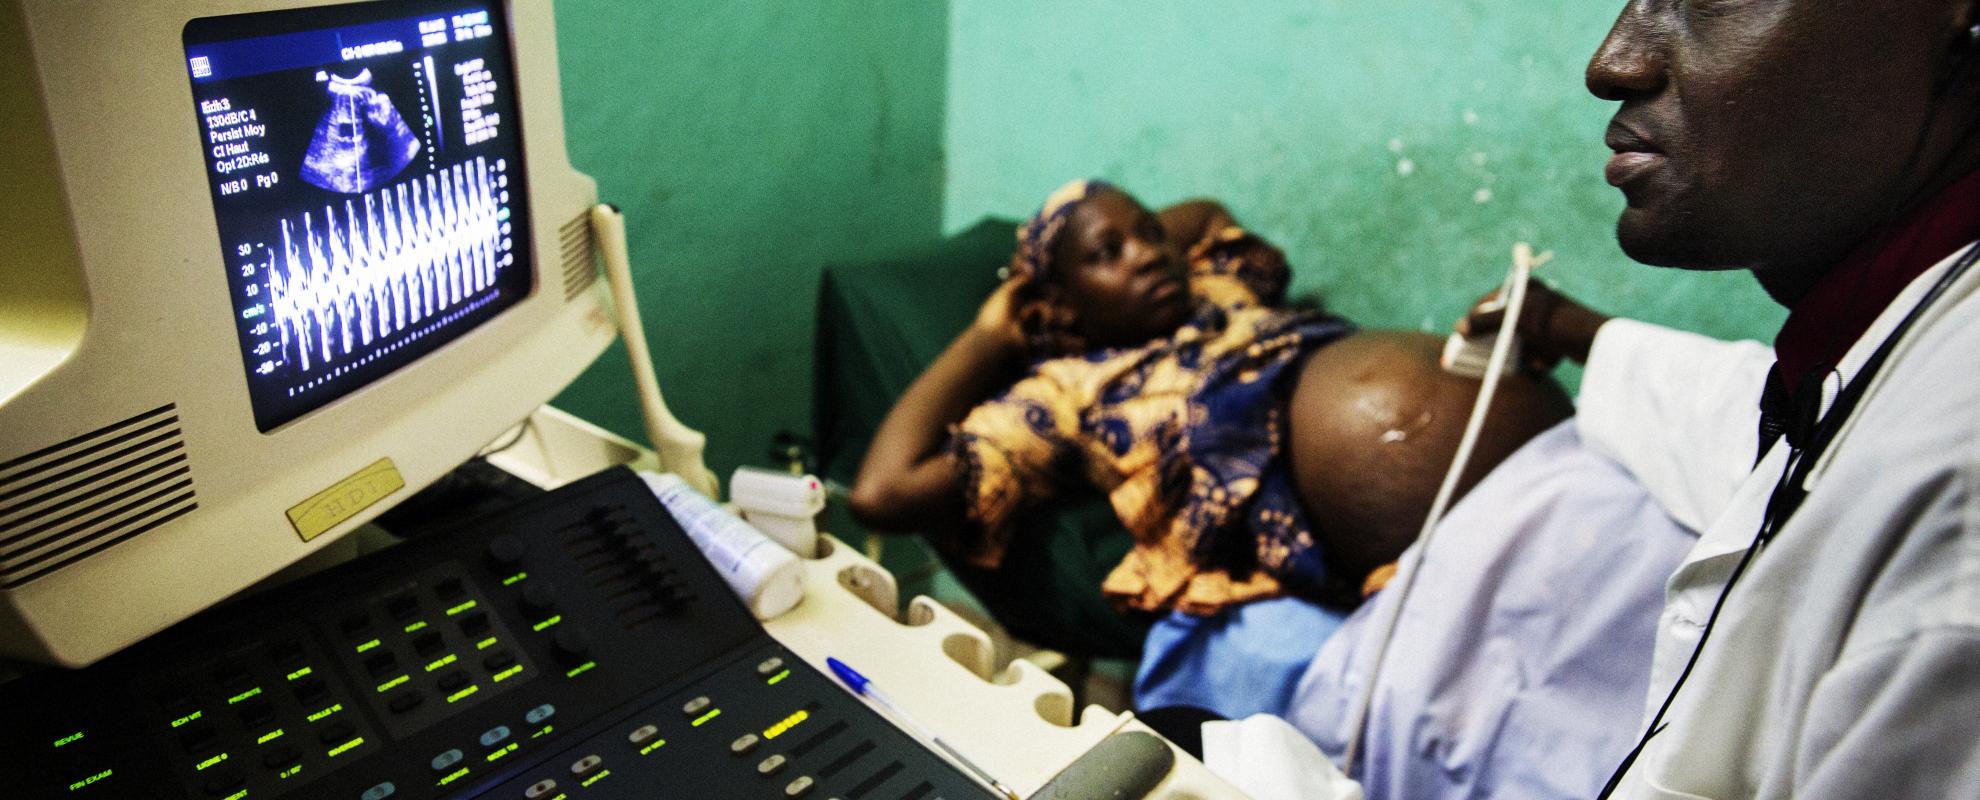 Dokter lamine diakité, consultatie van zwangere vrouwen (Mali, juni 2015)